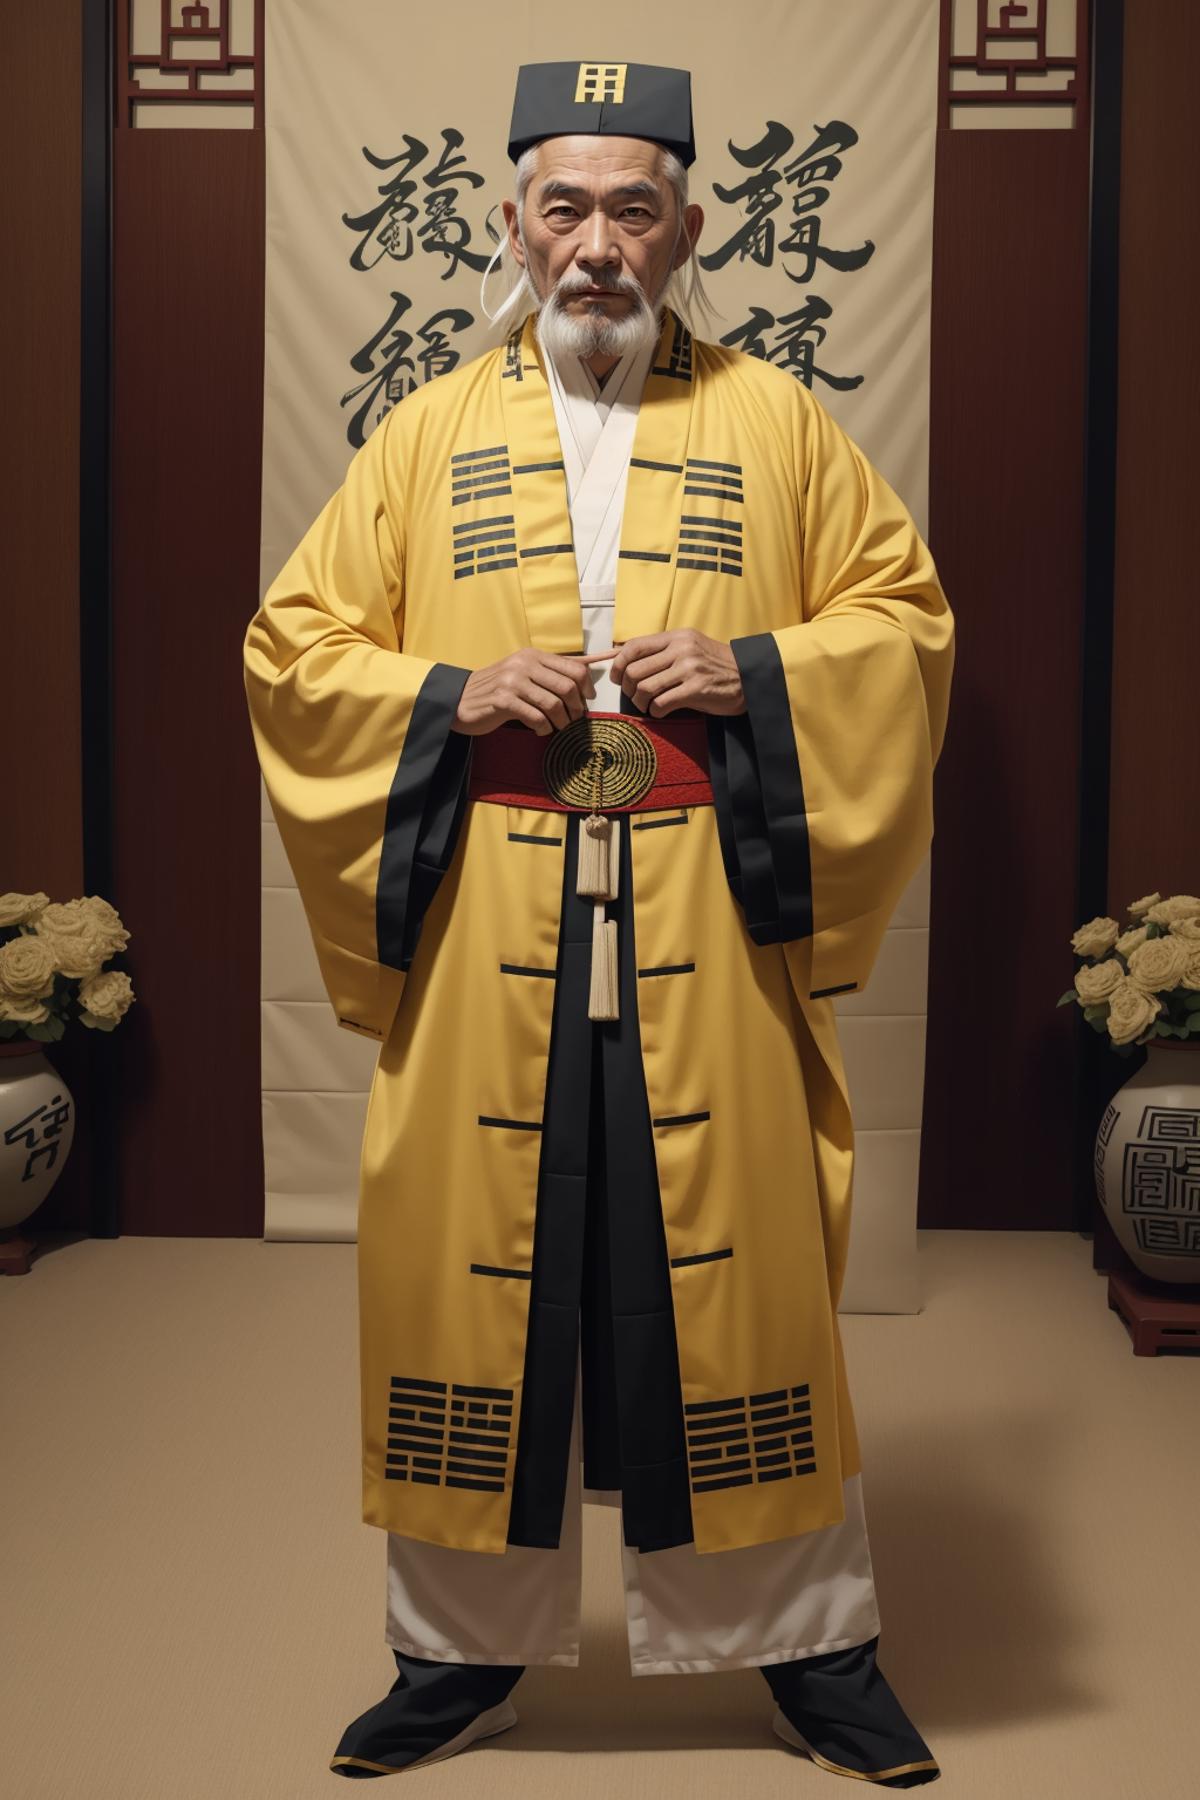 Taoist priest robe |  道士服 image by Sammian